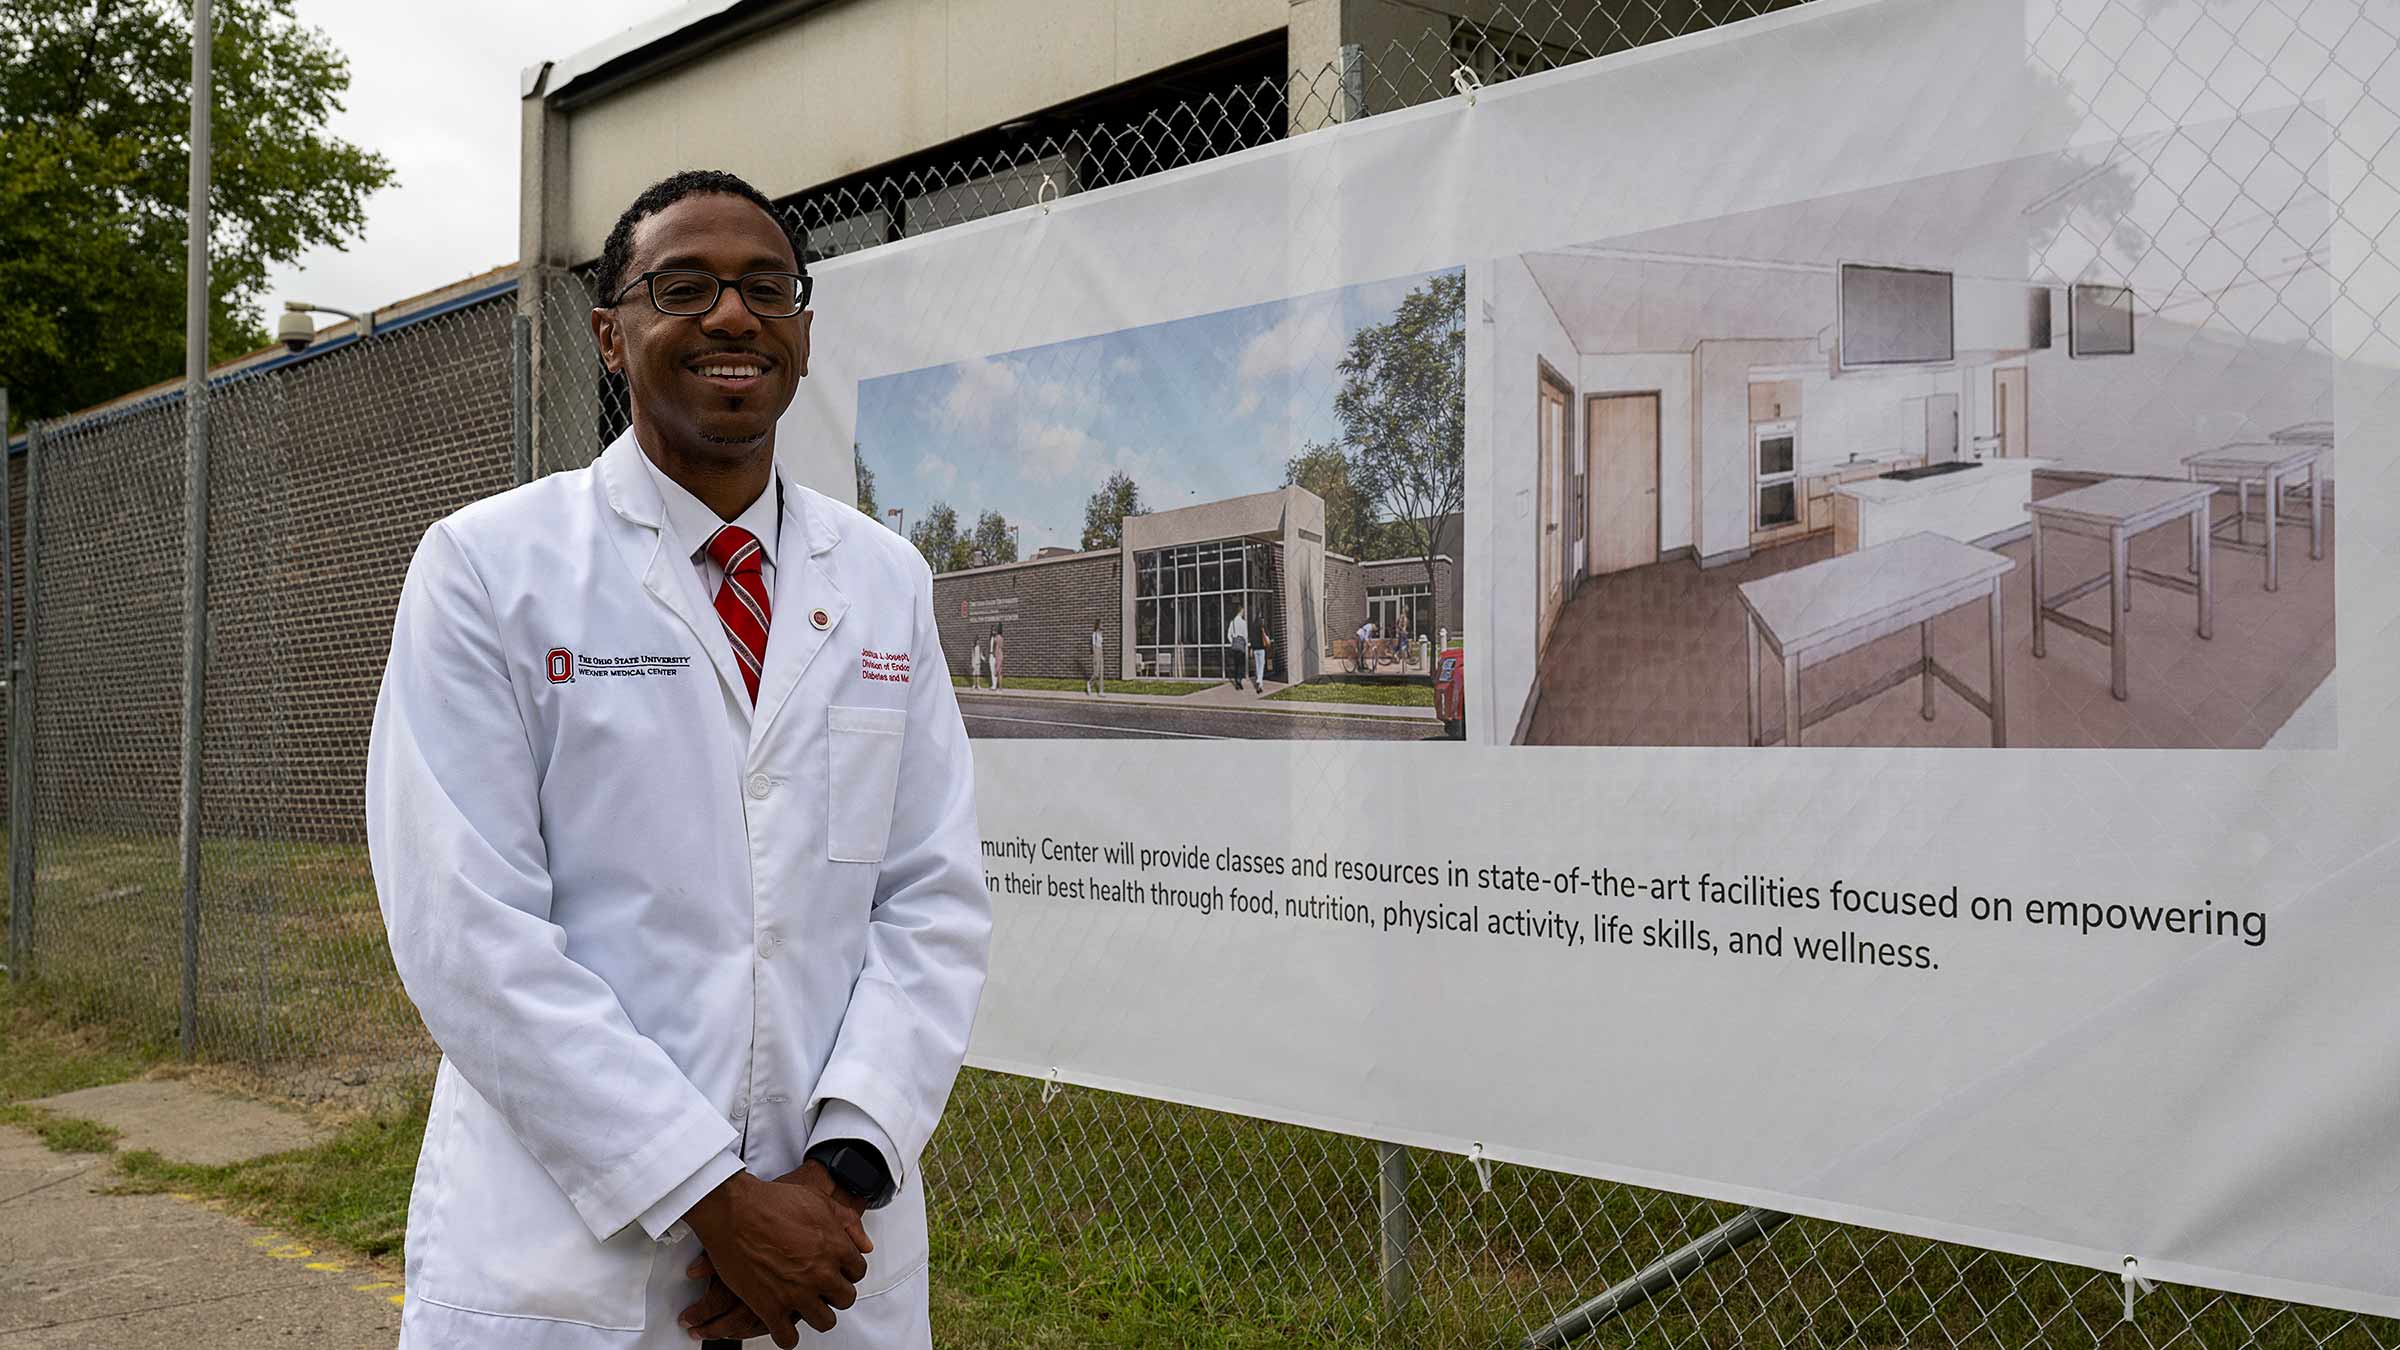 Dr. Joseph standing next to construction site